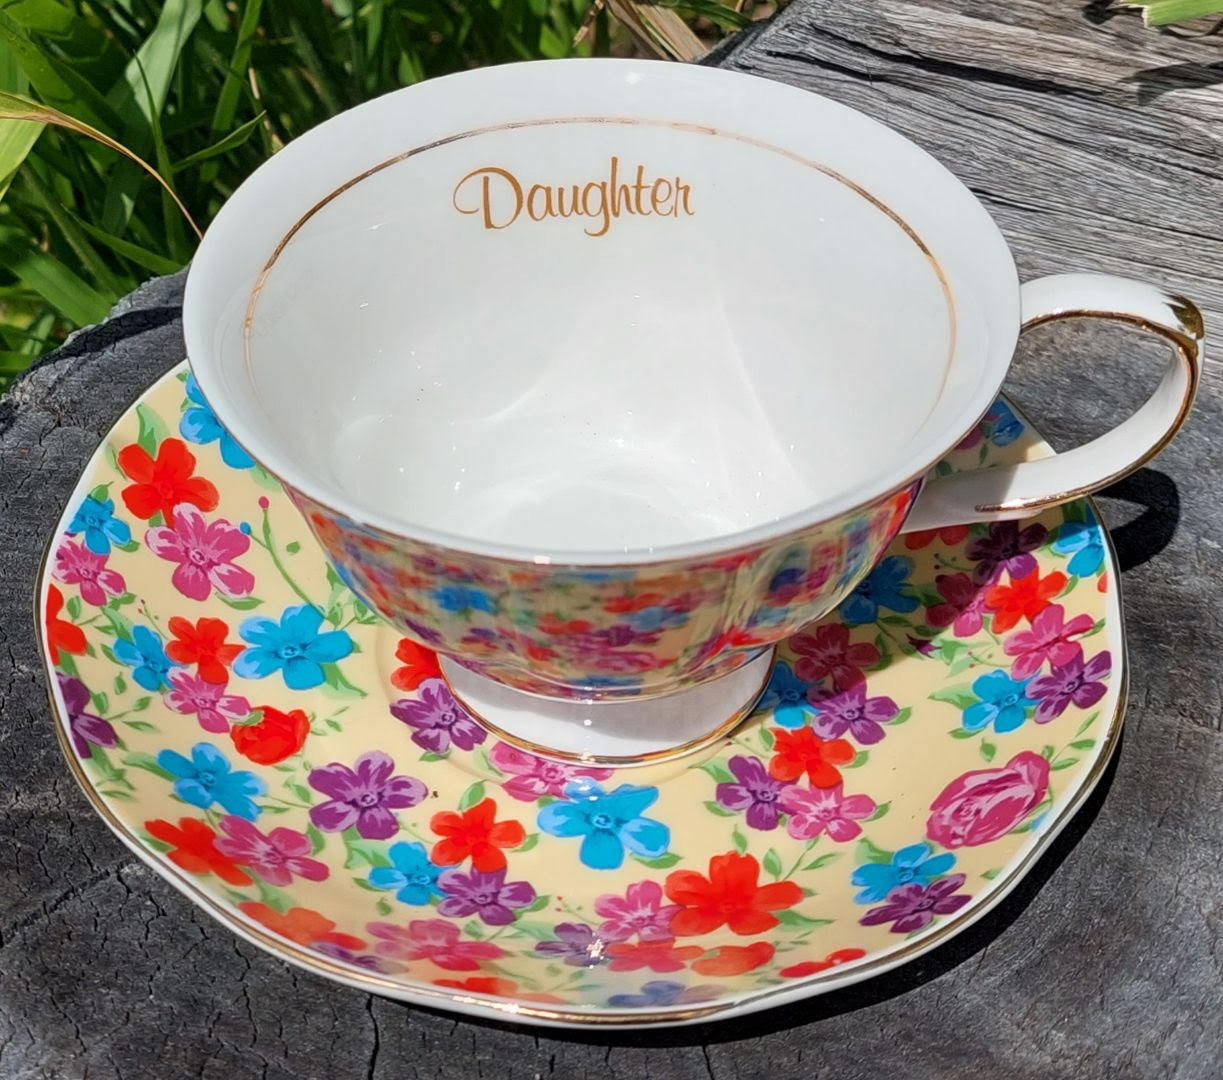 Daughter Cream Flower Teacup (Custom)